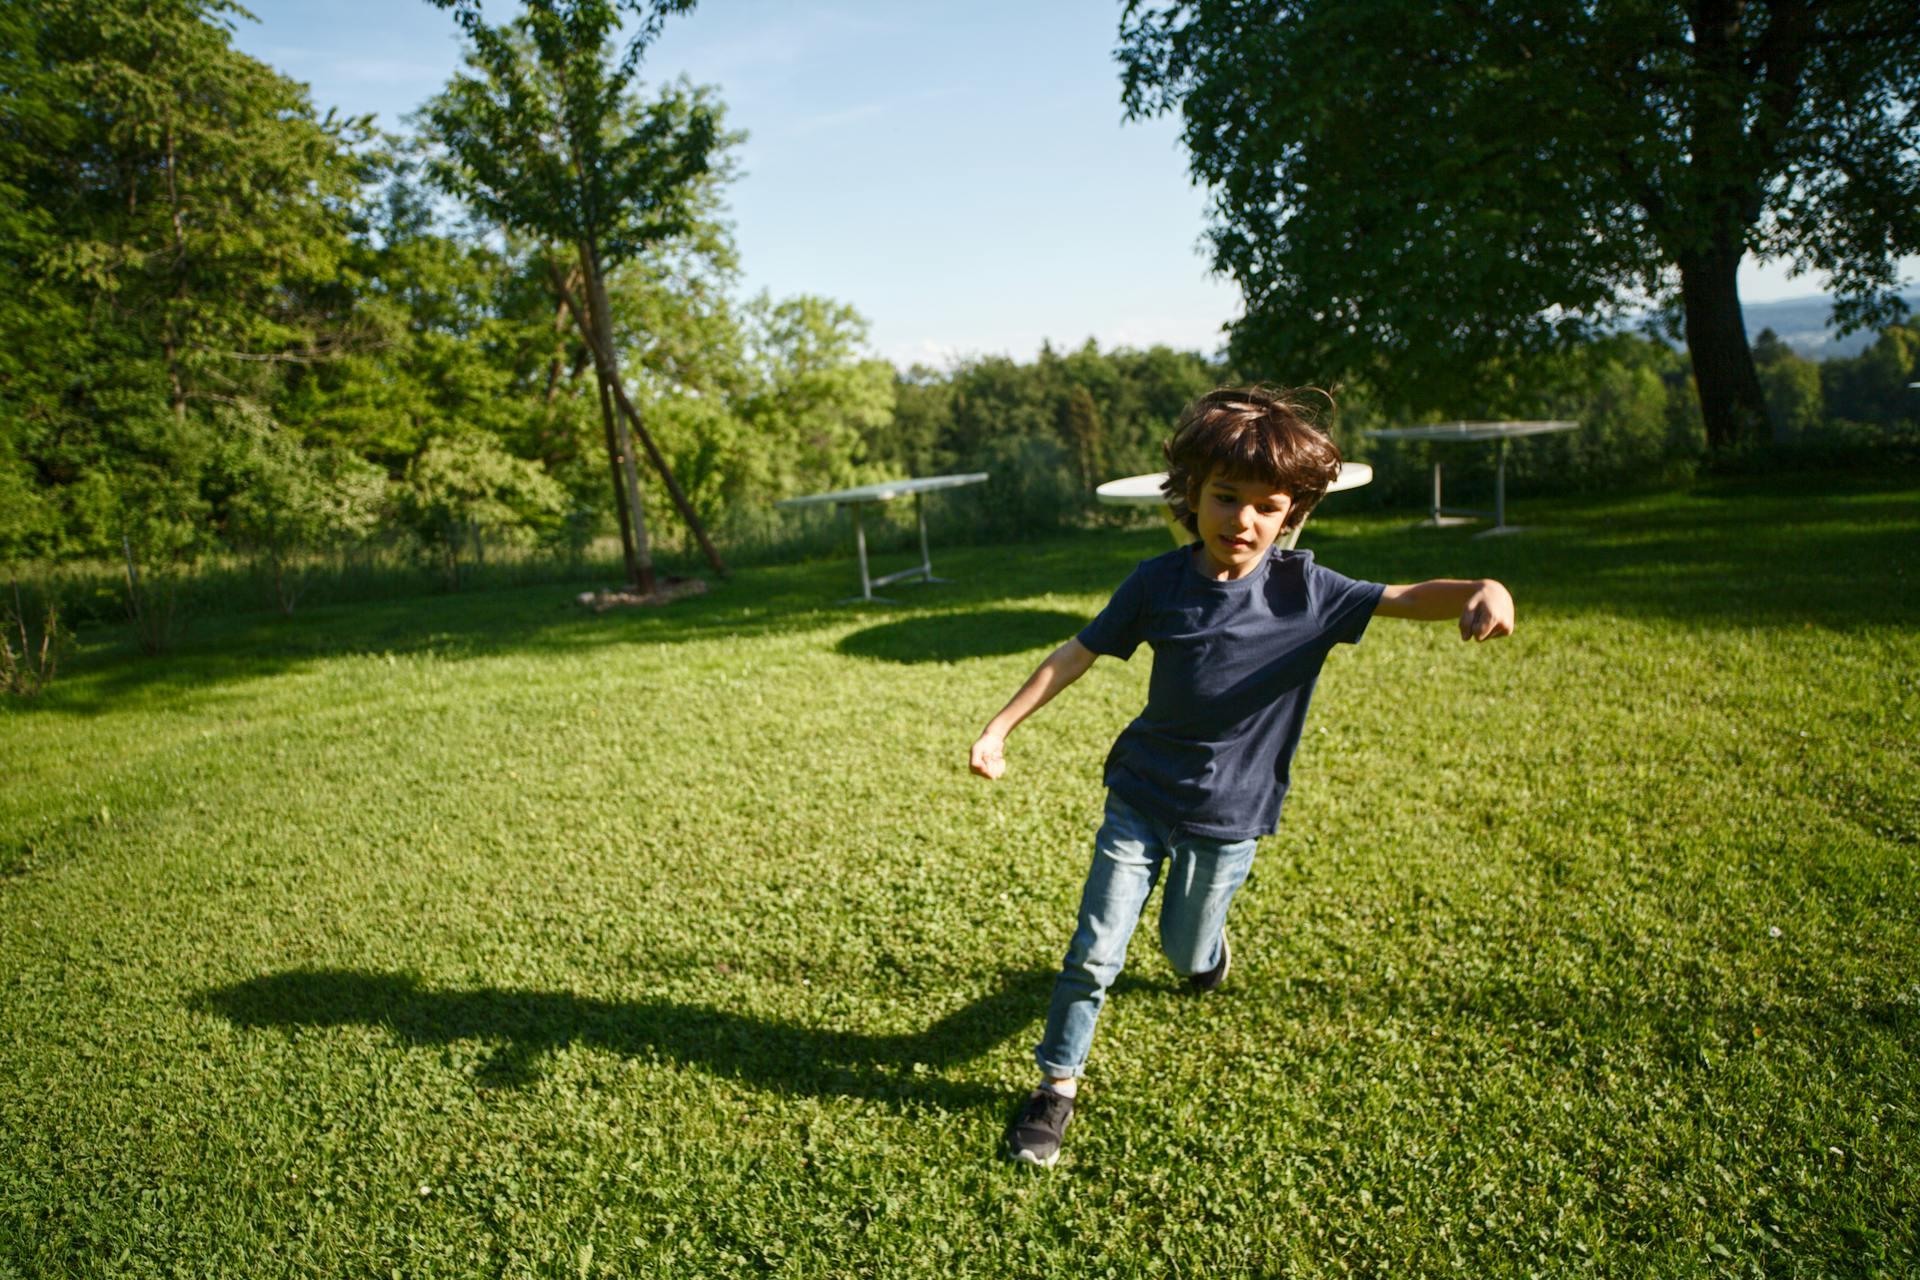 A cheerful boy running | Source: Pexels